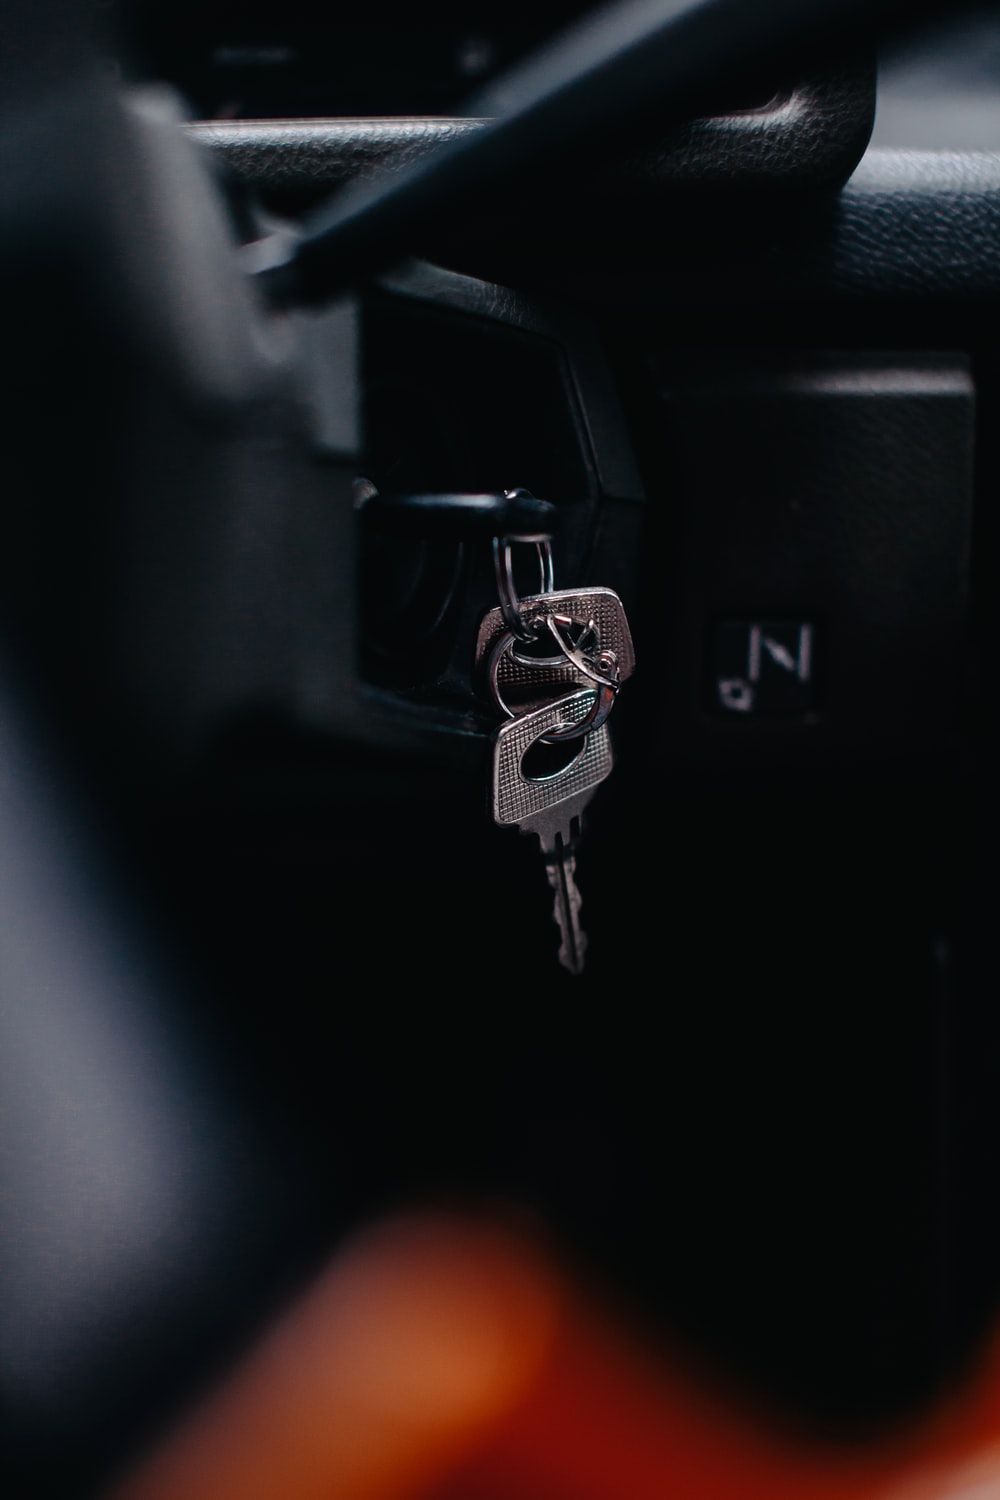 Car Keys Picture. Download Free Image